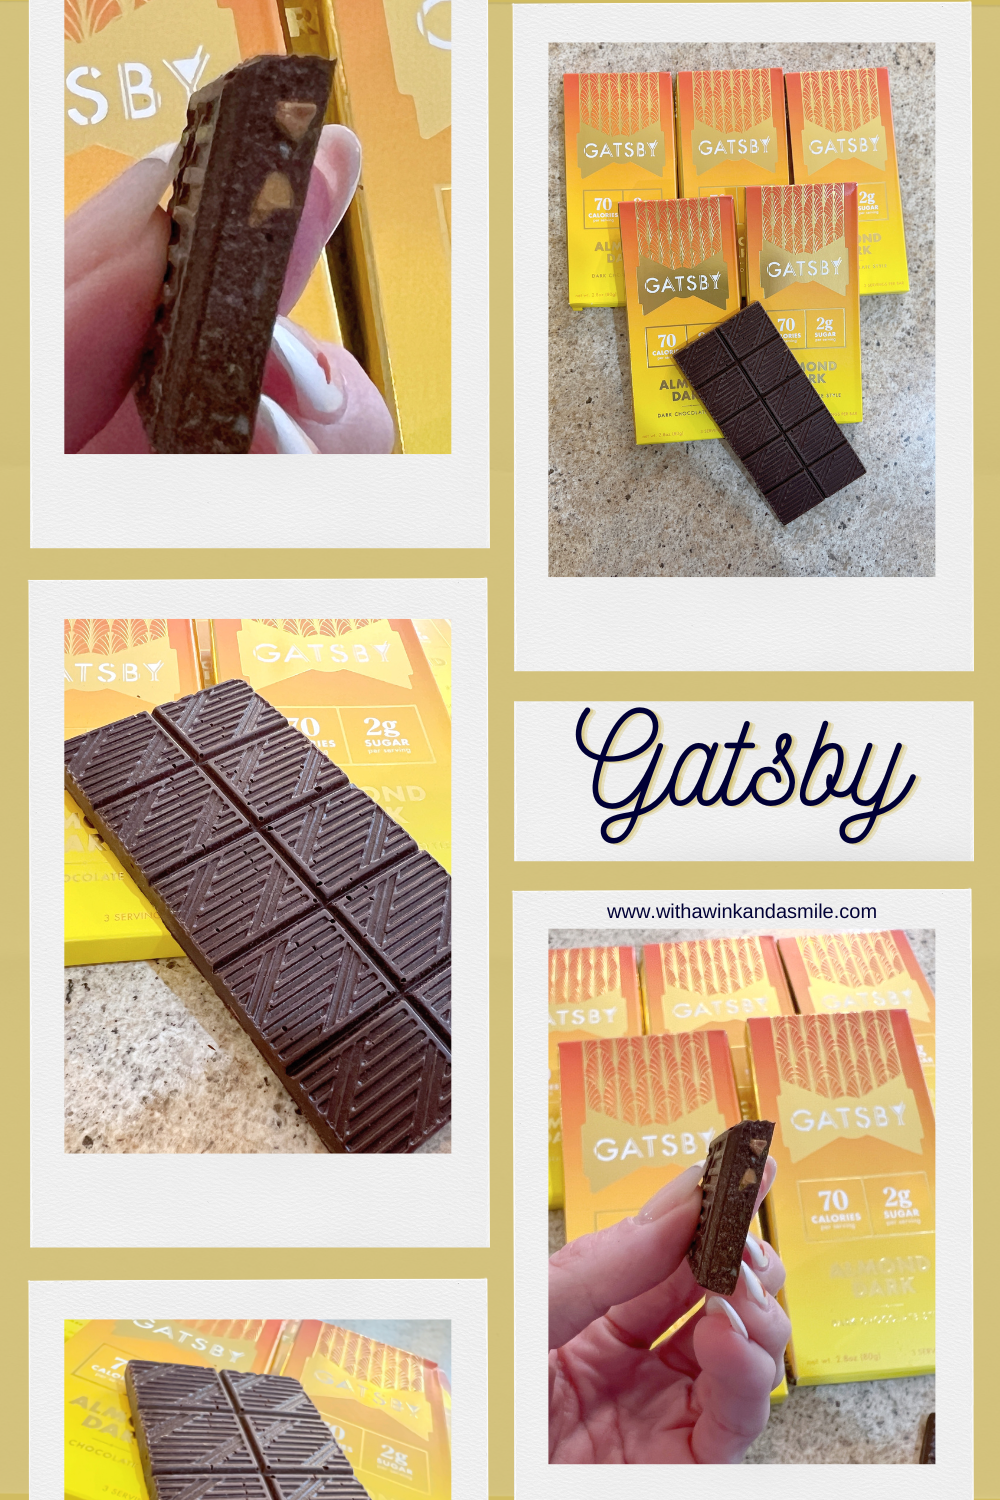 GATSBY Chocolate 🍫 (@gatsbychocolate) • Instagram photos and videos